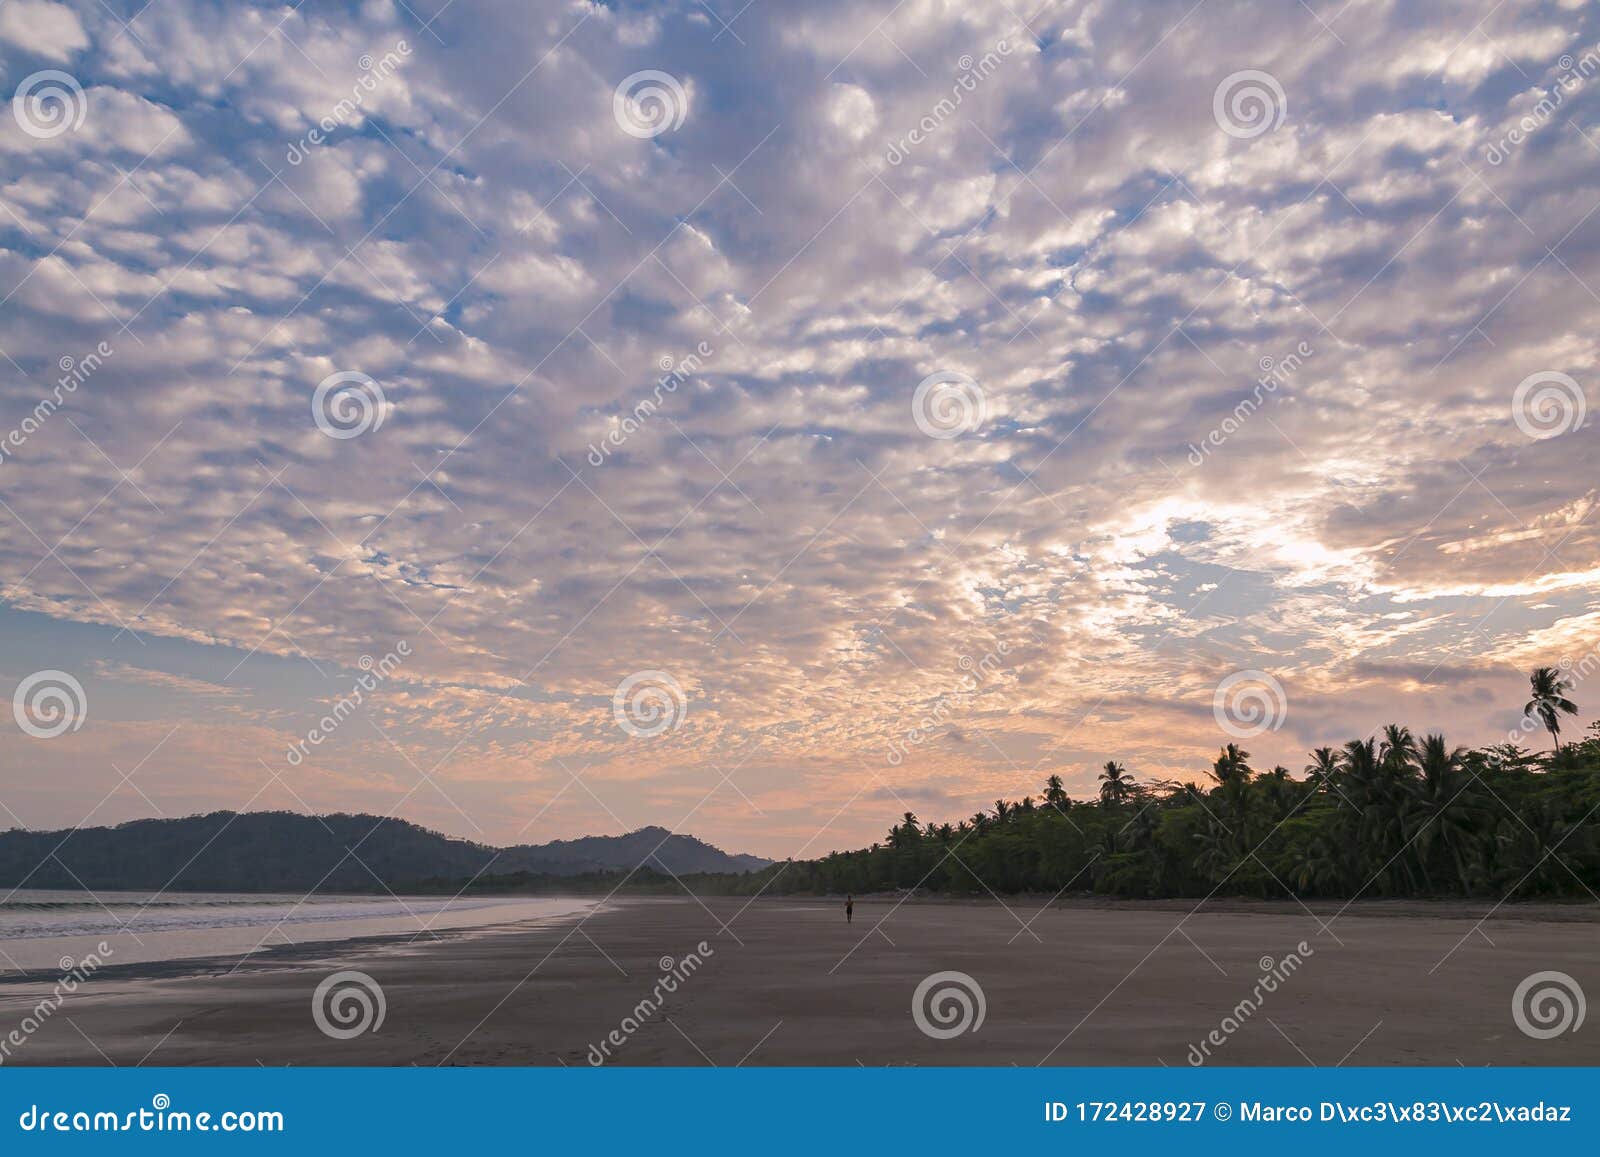 person walking in a sunset at tambor beach, puntarenas costa rica